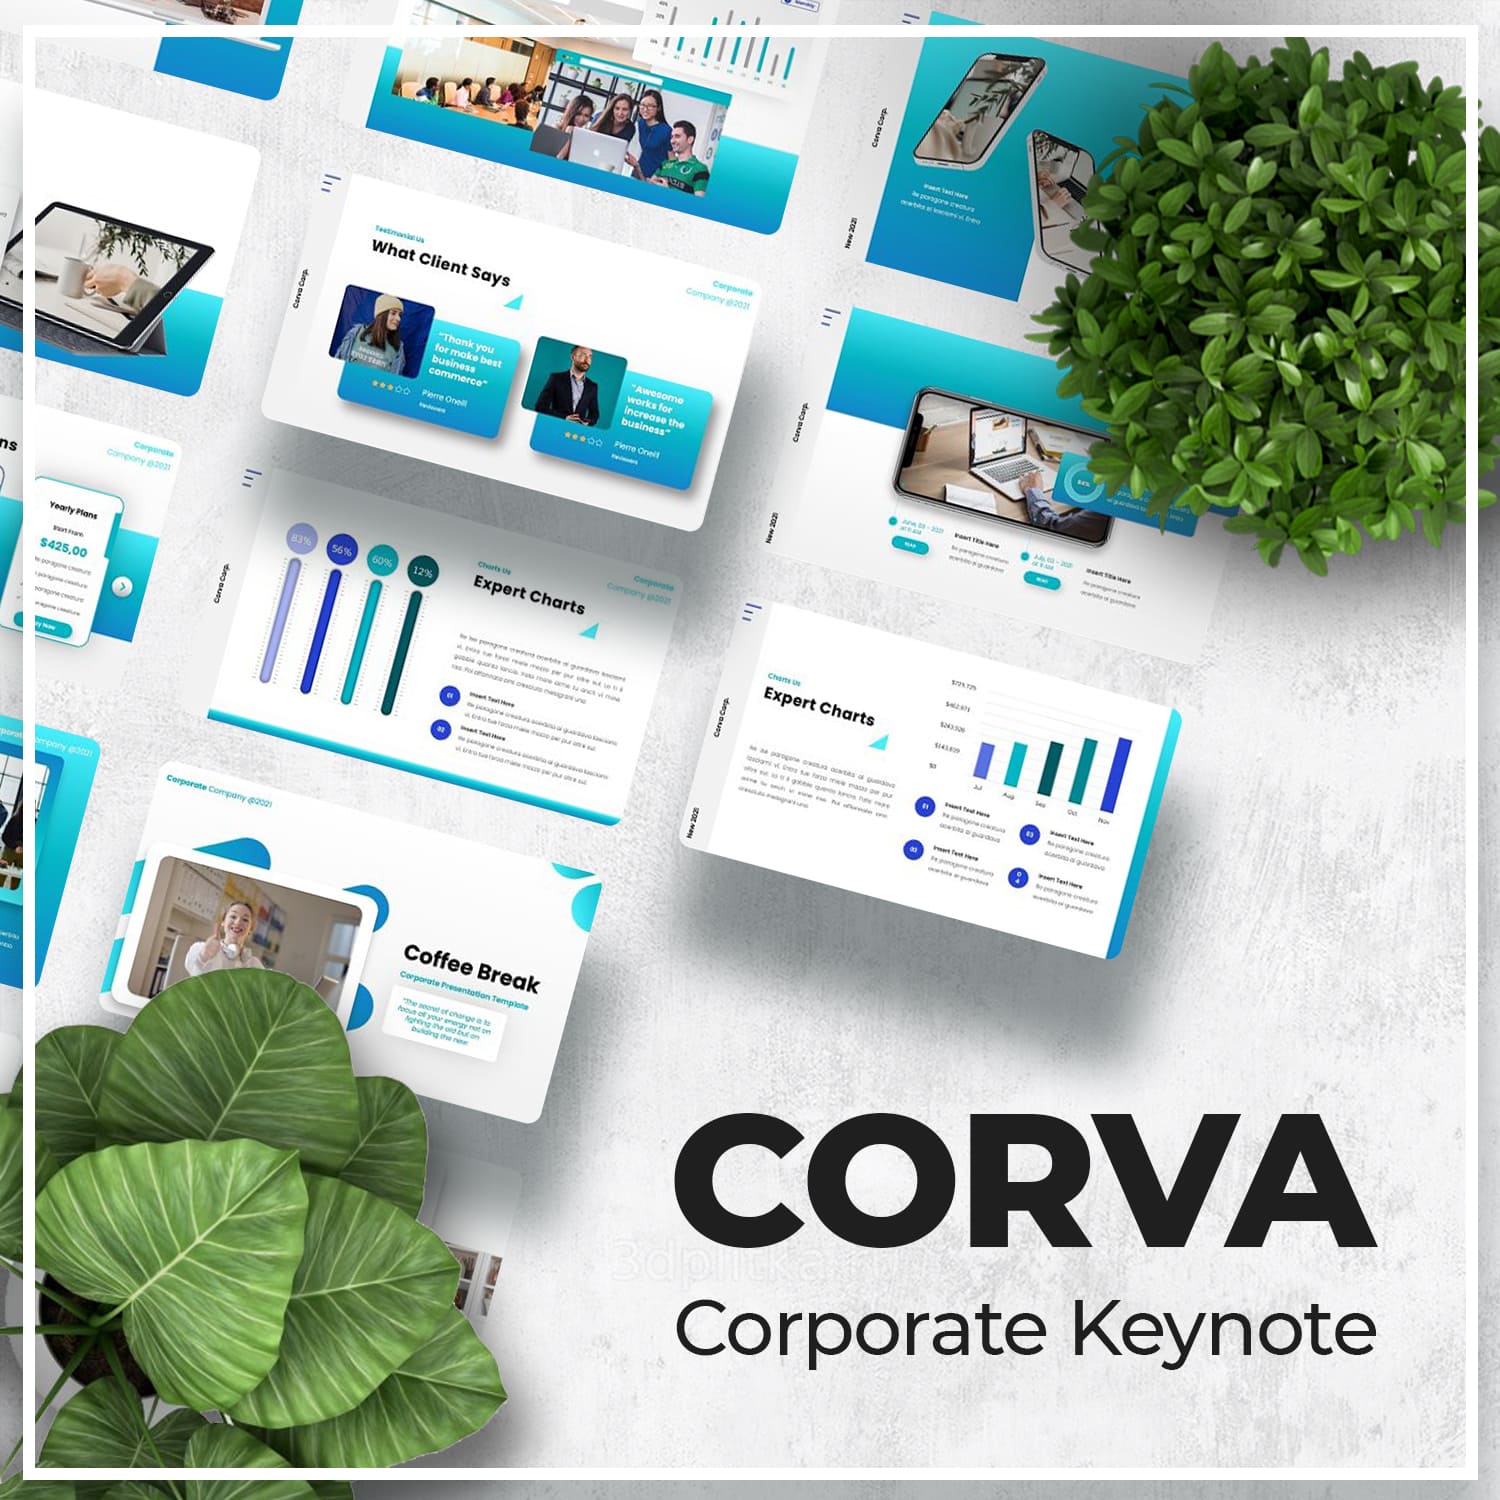 Corva - Corporate Keynote main cover.